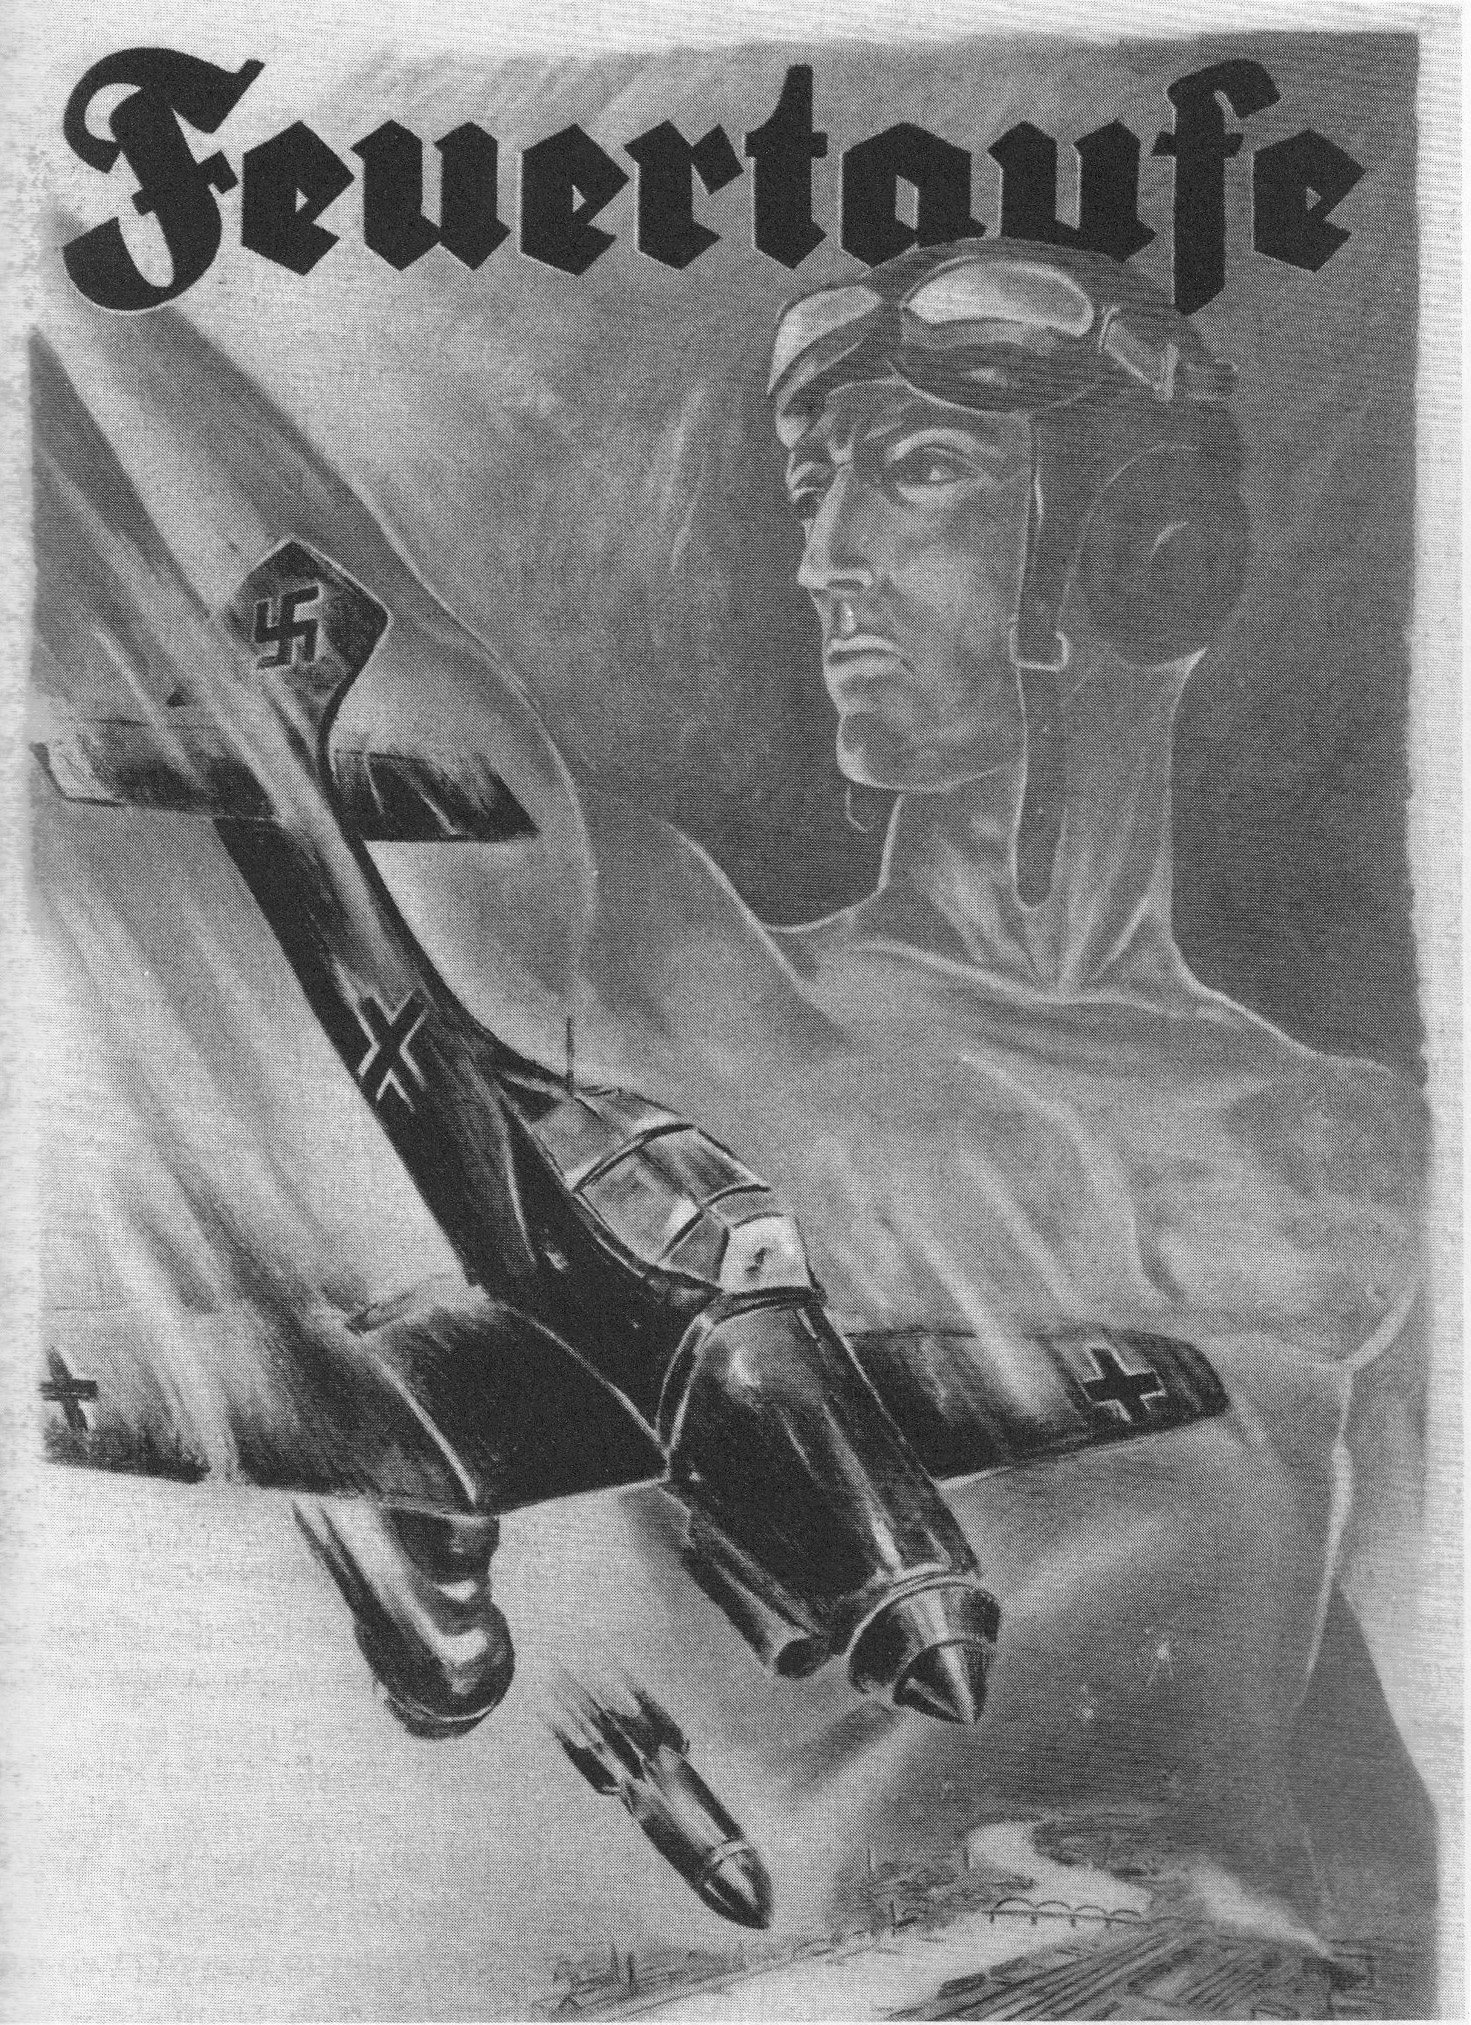 propaganda poster circa 1940s